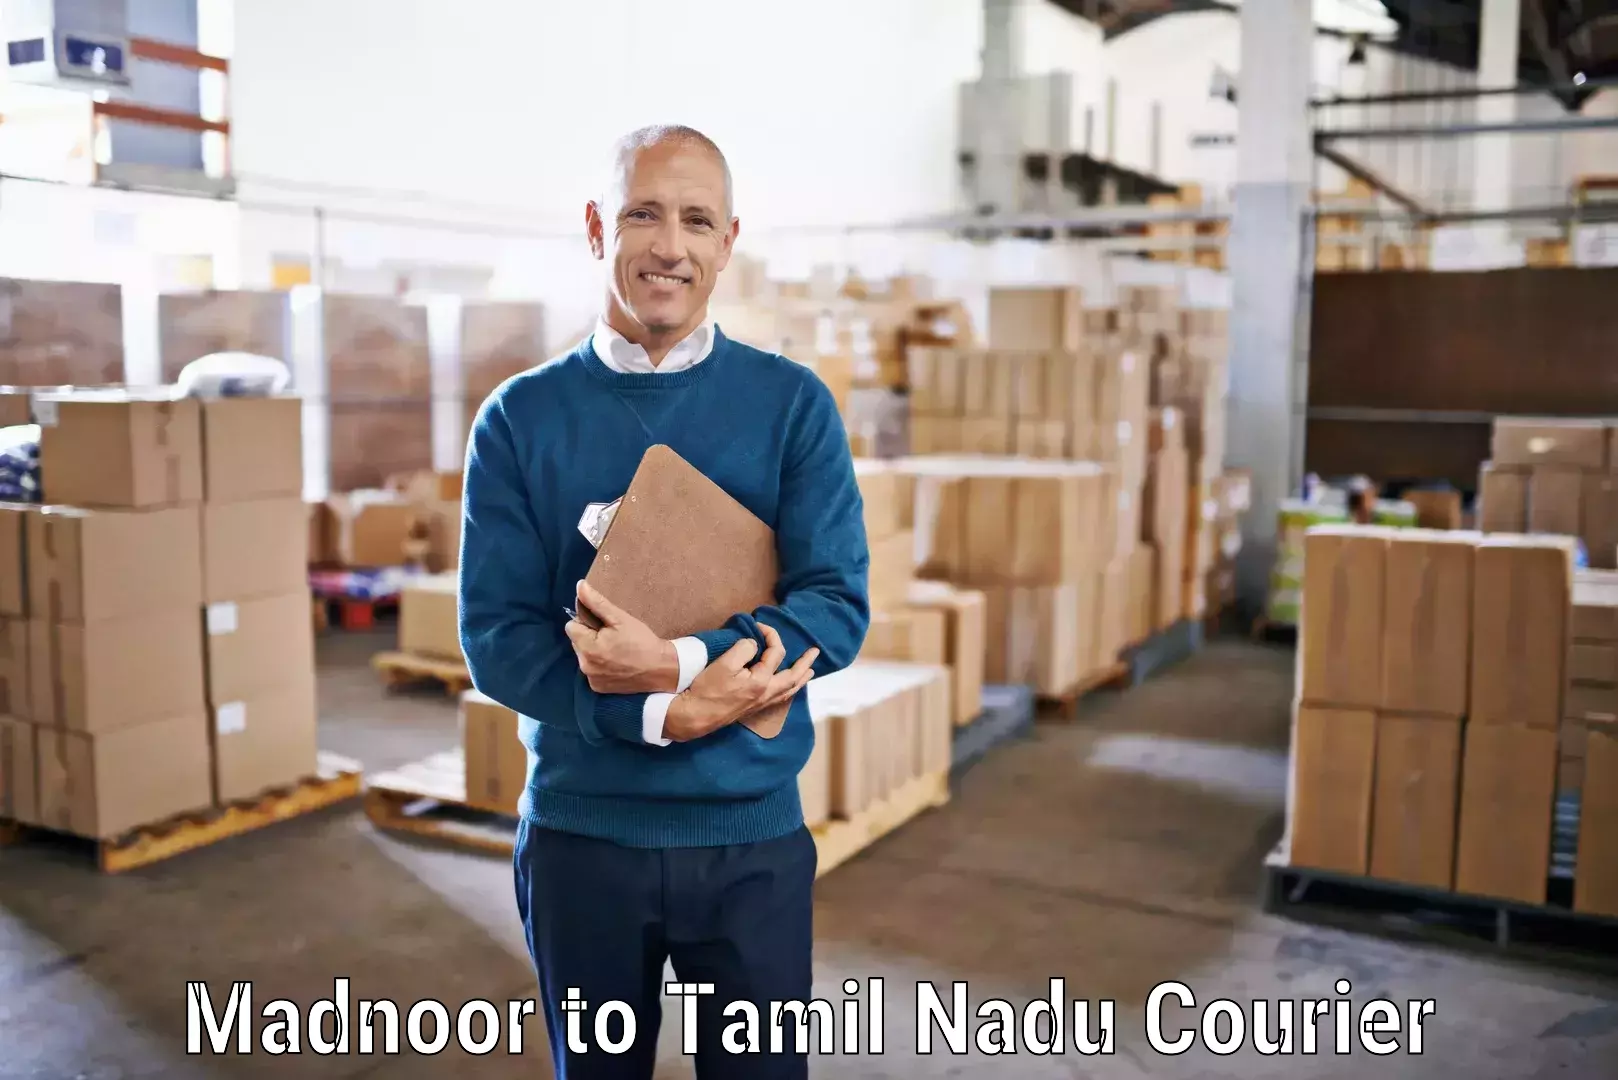 Online courier booking Madnoor to Thiruvadanai